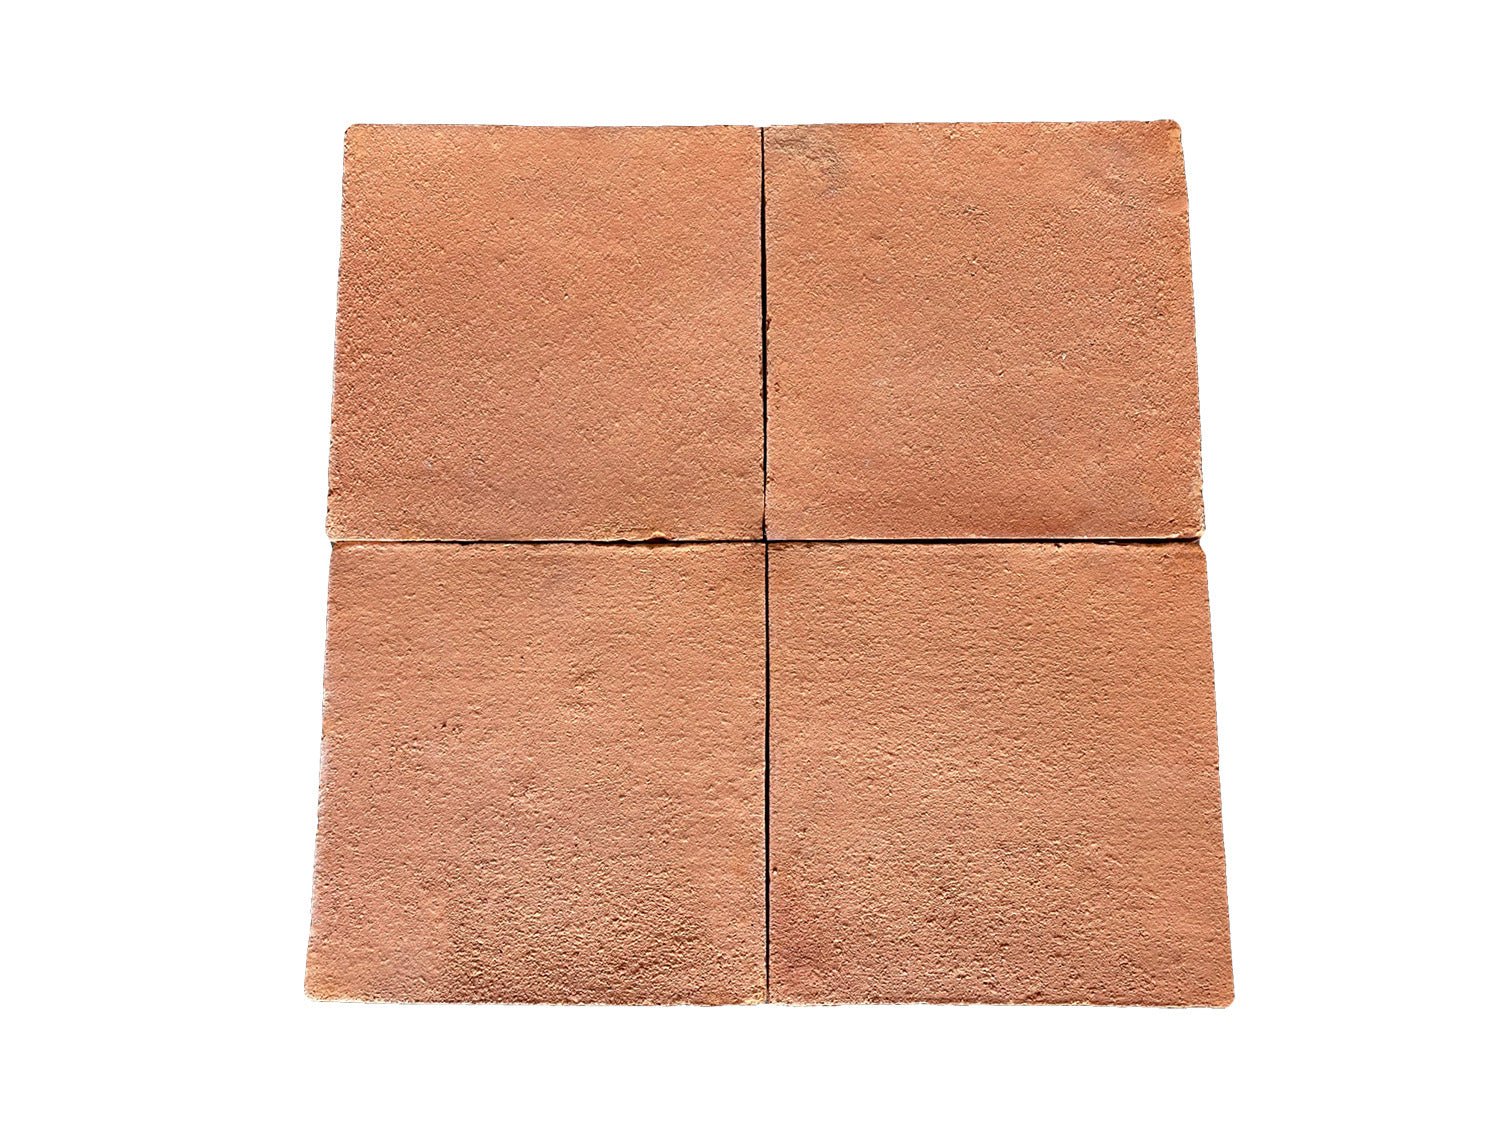 Terracotta tegels 40x40x2cm Roja - Handgemaakt - Solza.nl